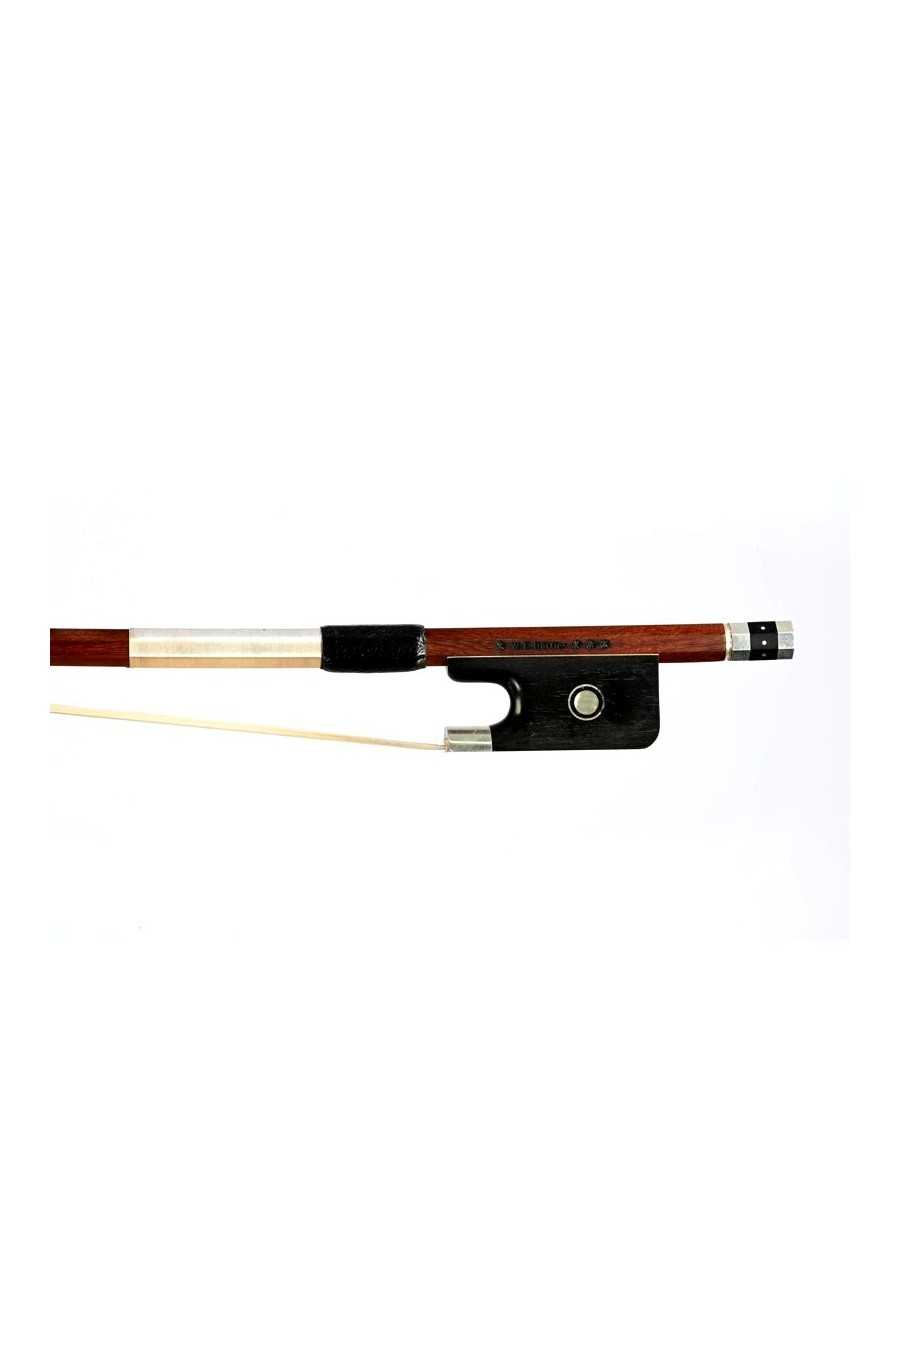 Dorfler Cello Bow - 22a Pernambuco Wood - Genuine Silver Trimming - Master Bow - Octagonal